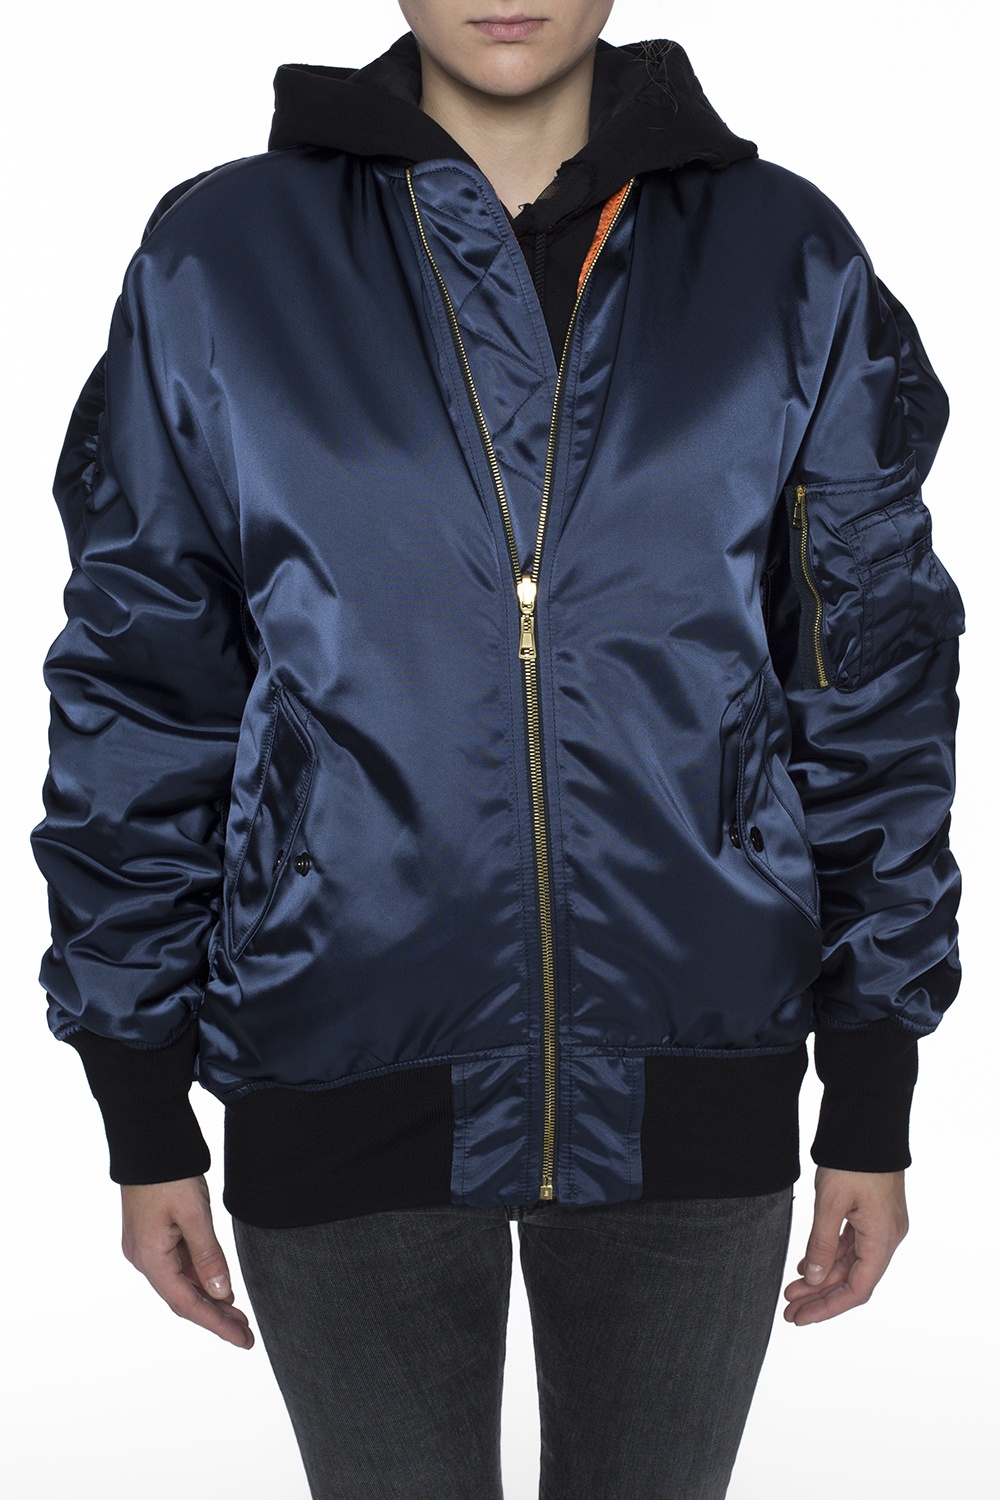 hierarki En begivenhed Foreman Multicolour Reversible jacket Balenciaga - Vitkac TW